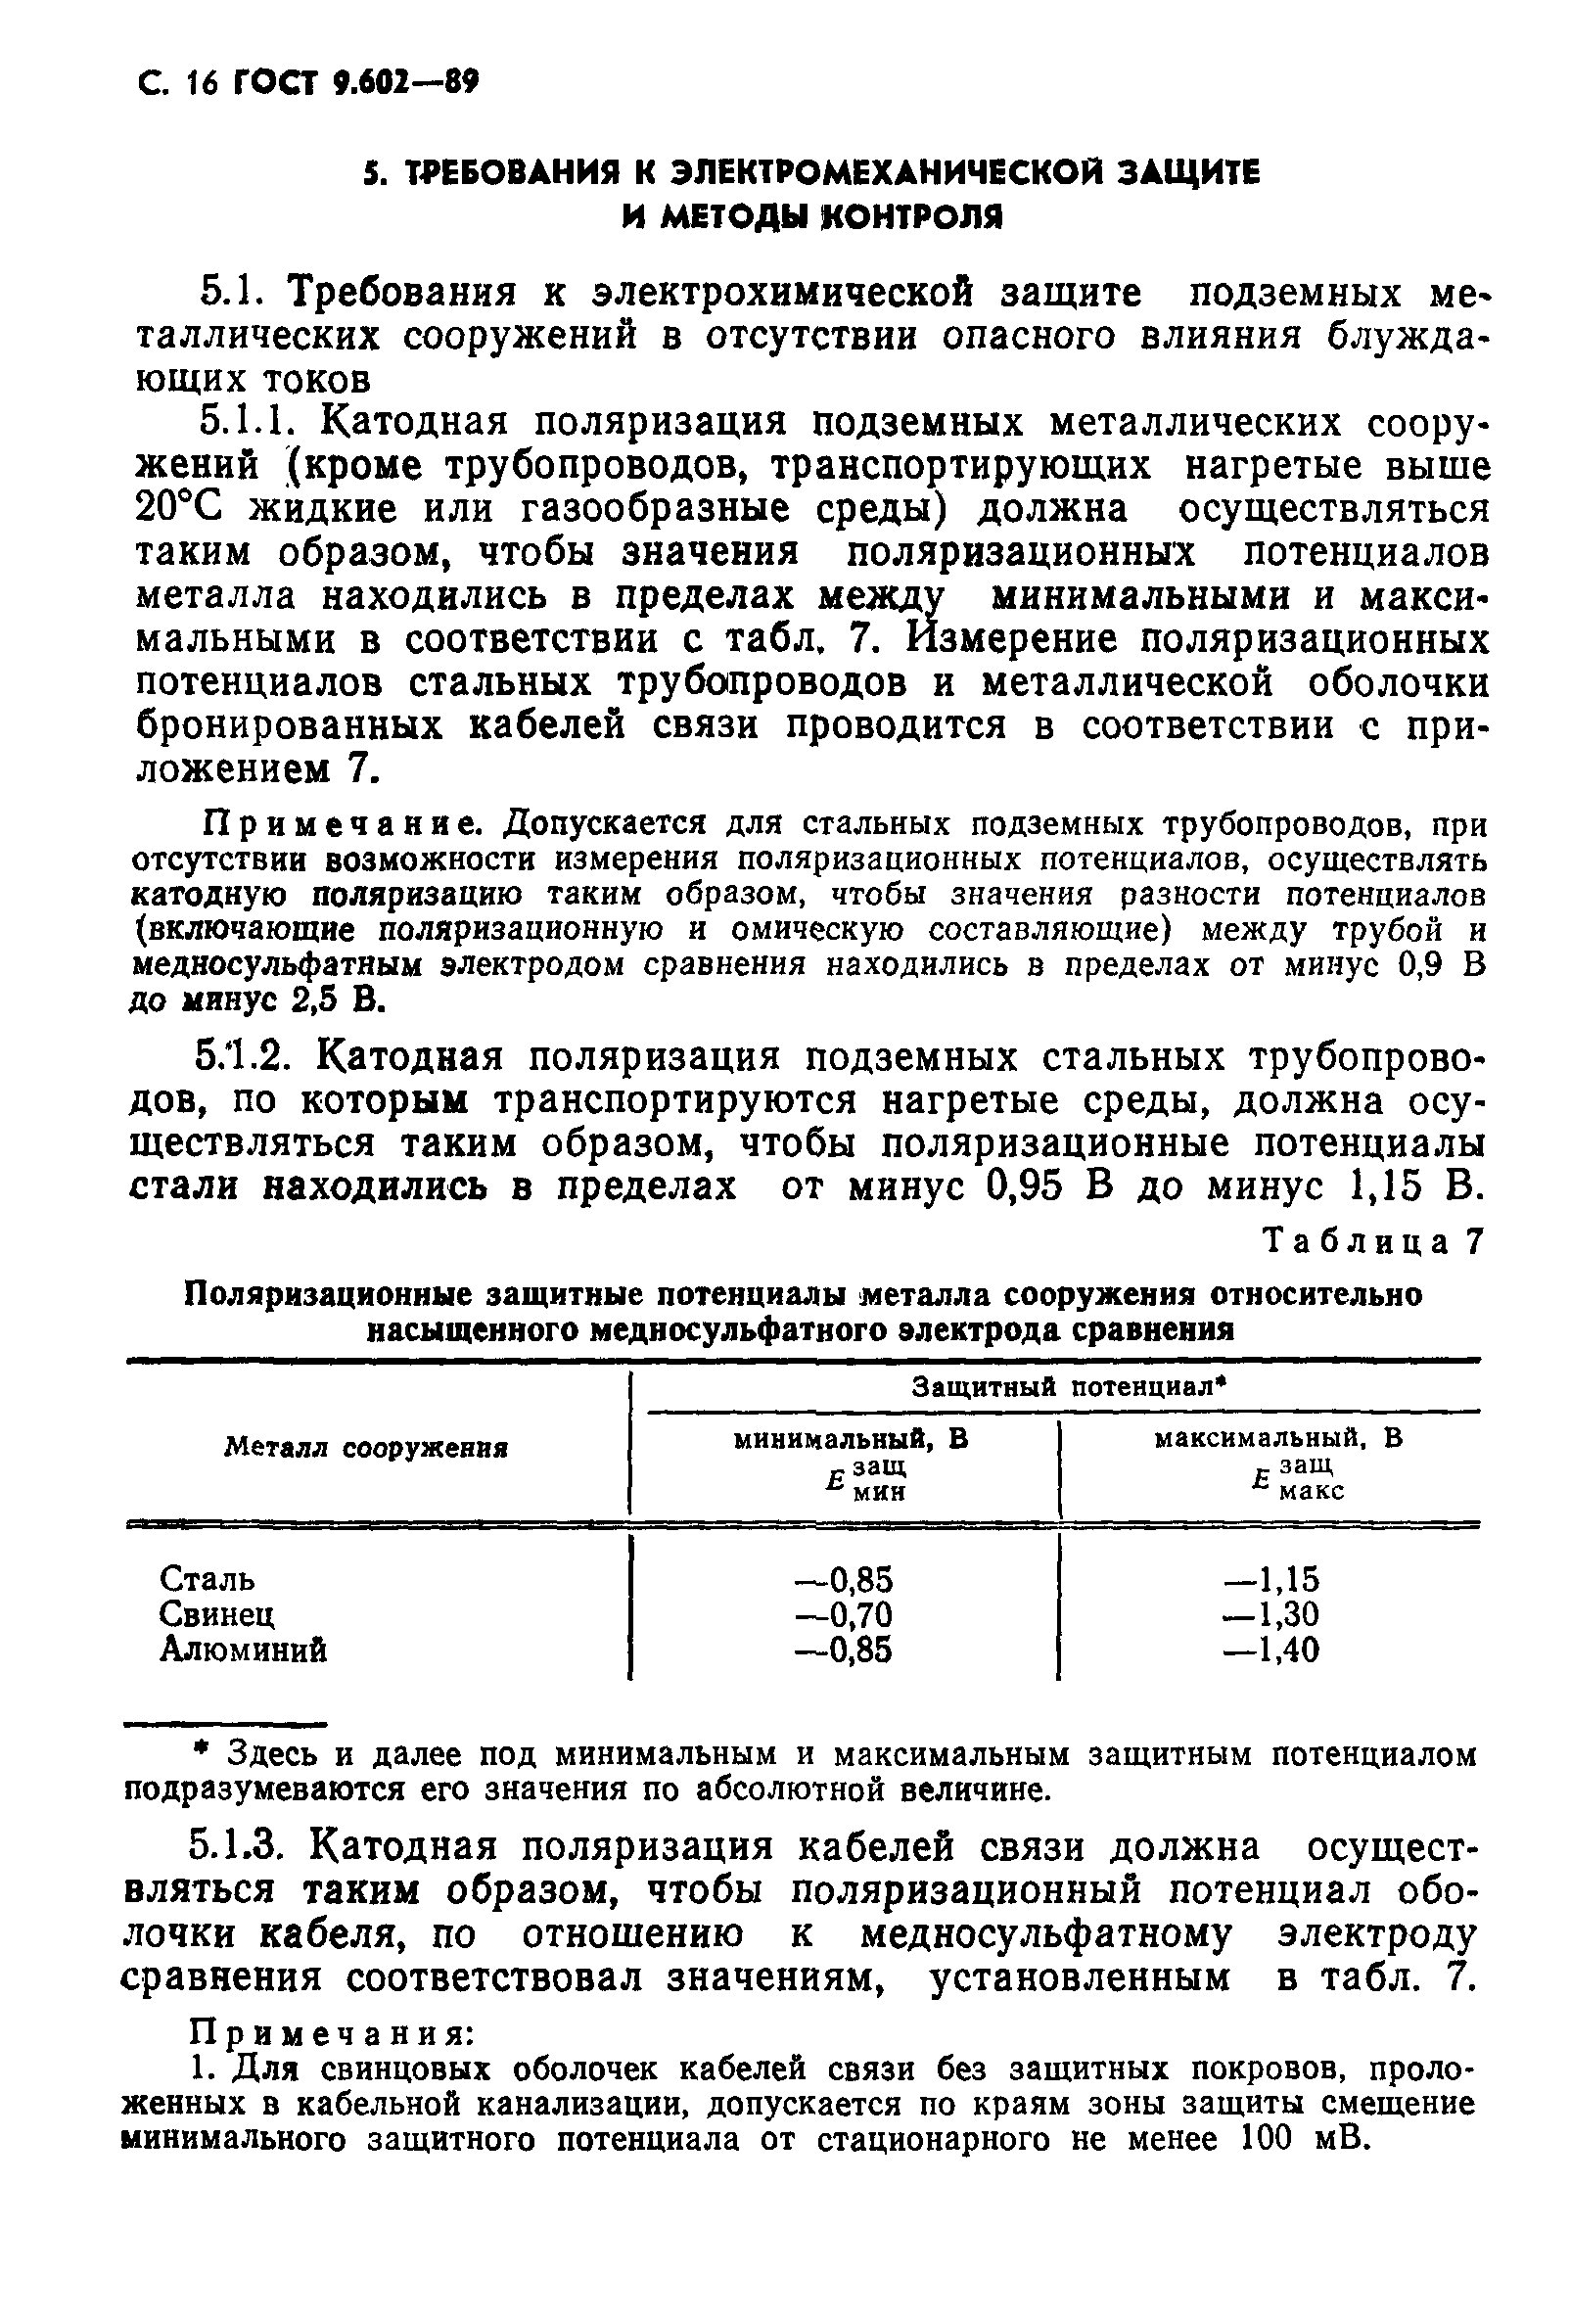 ГОСТ 9.602-89